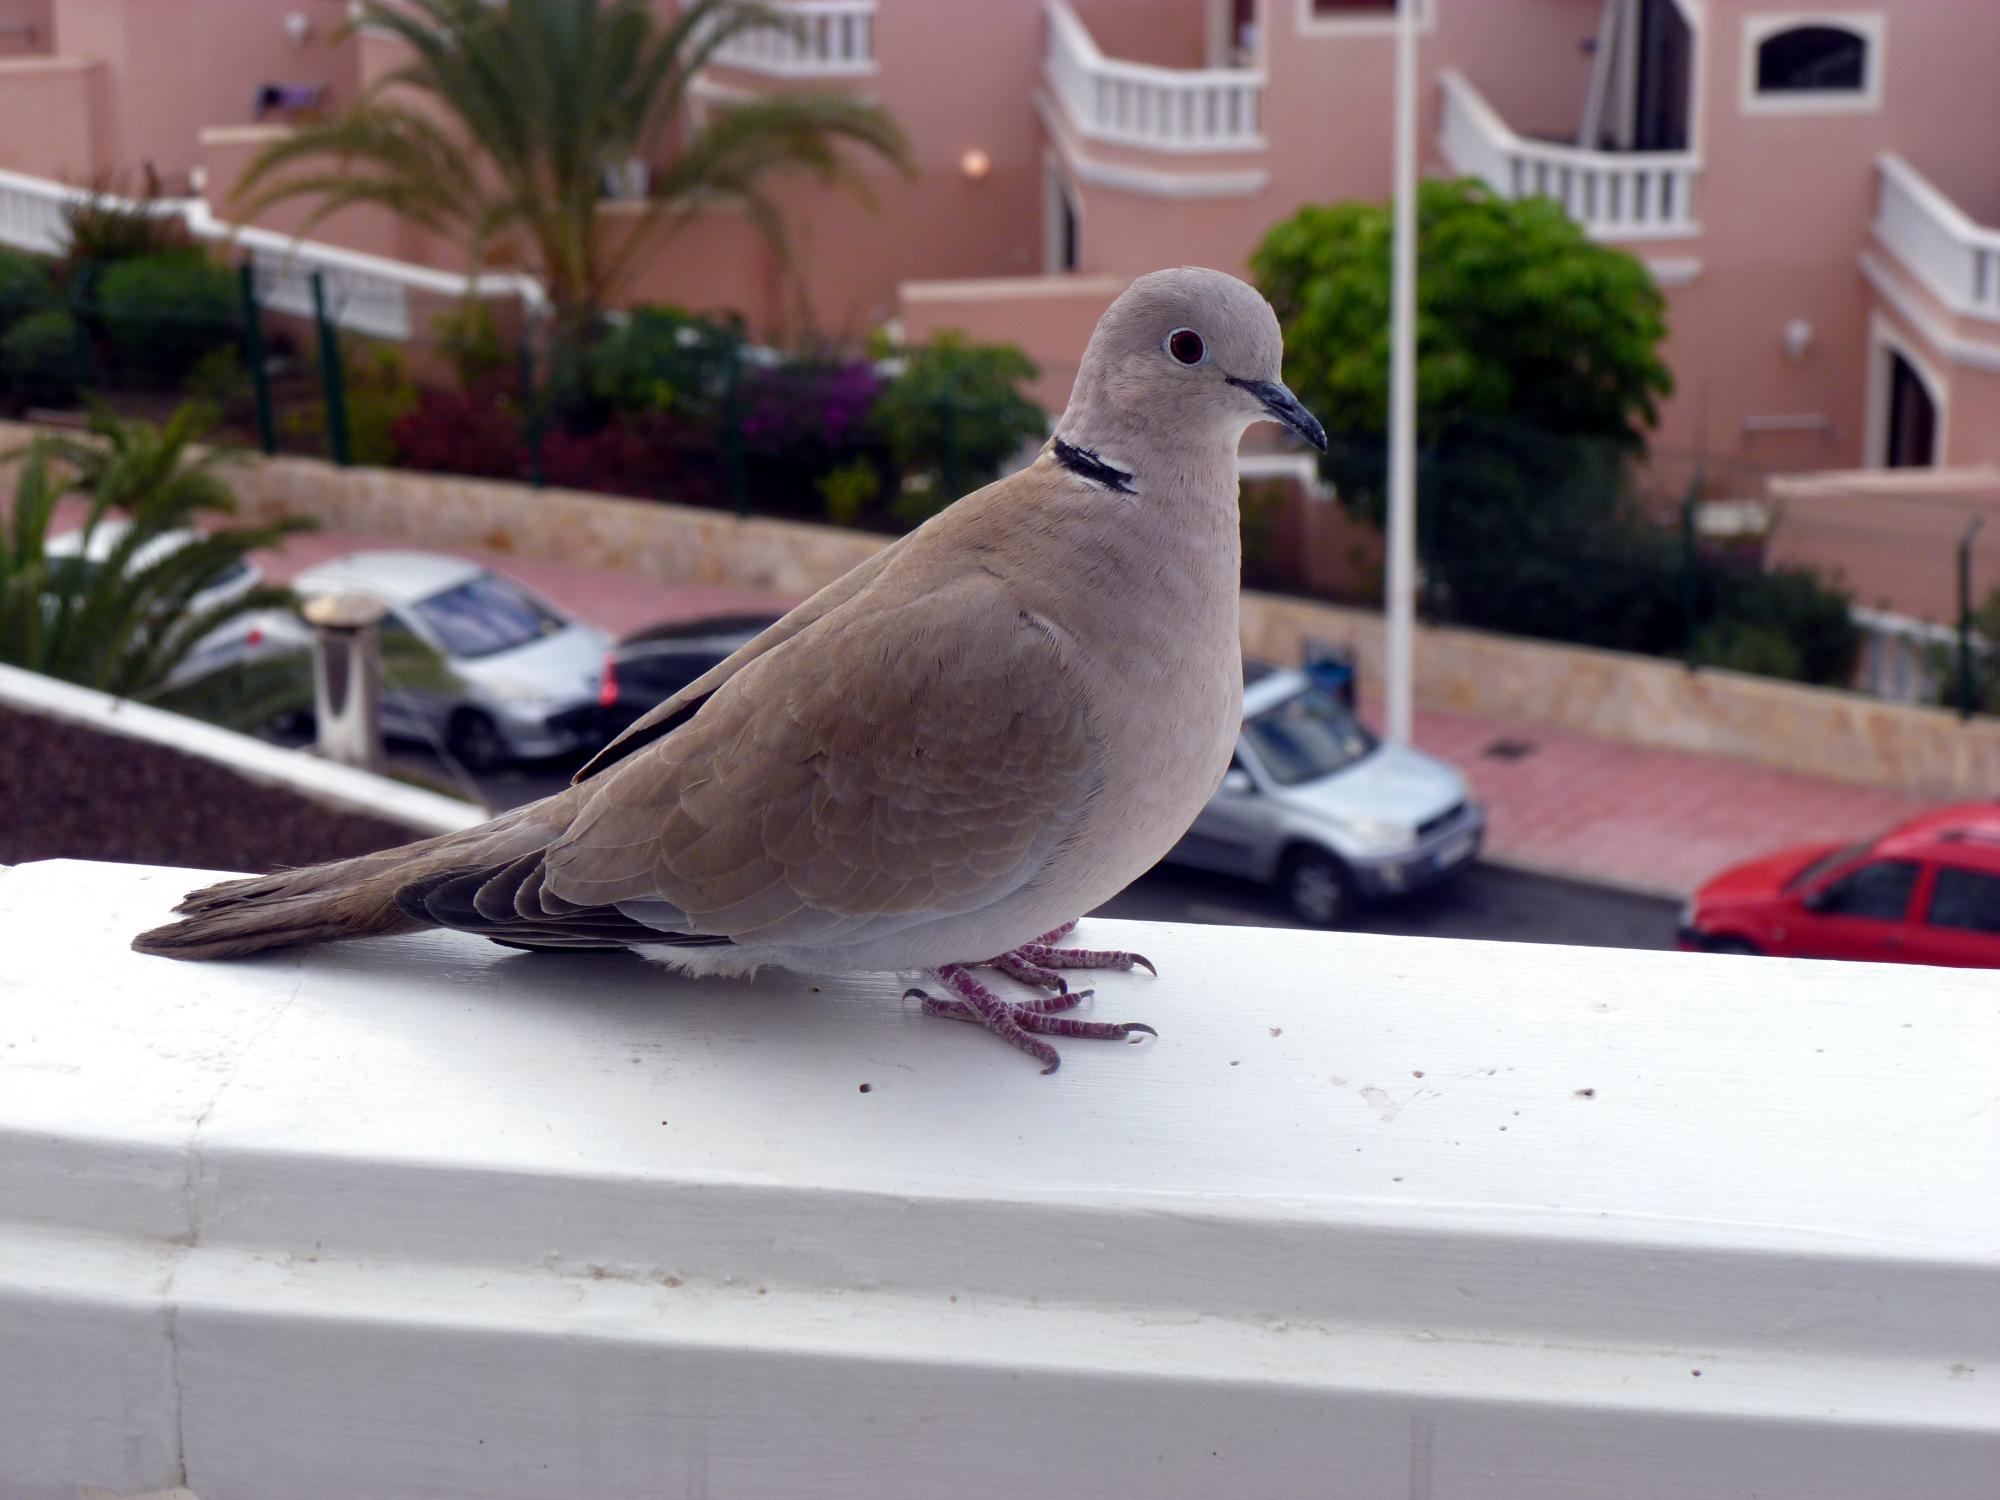  Canary Islands - Pigeon